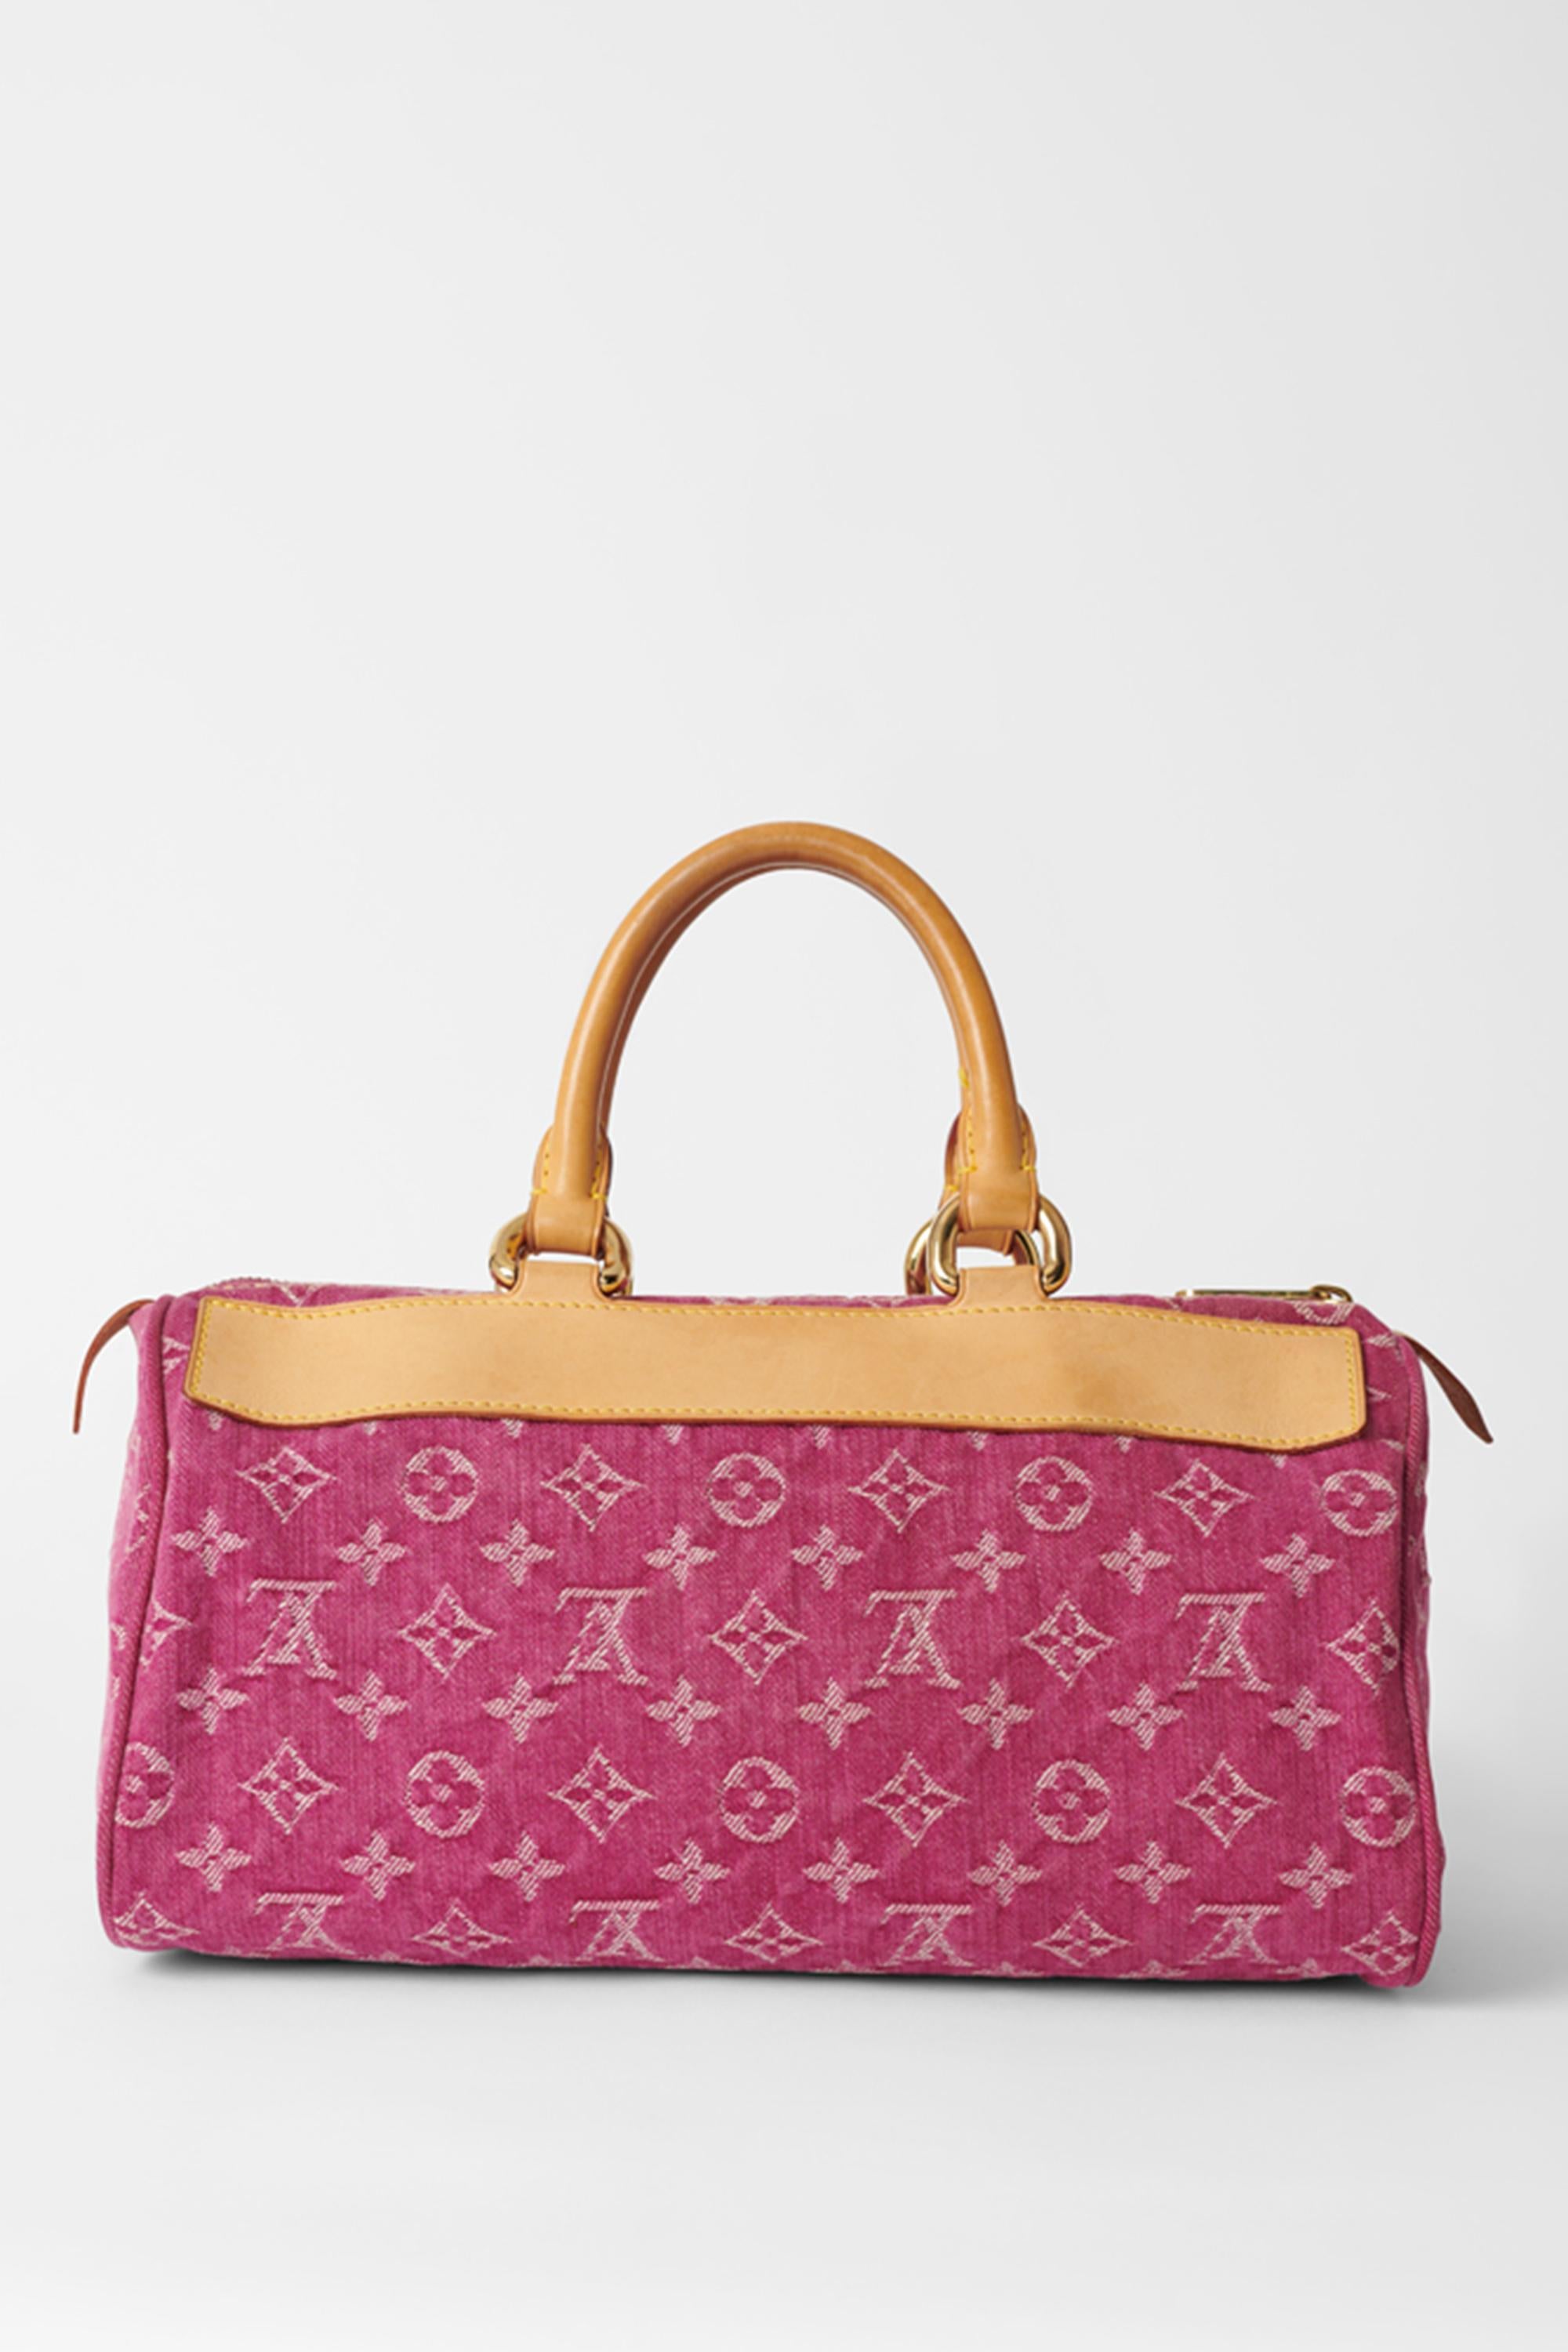 Louis Vuitton 2006 Pink Denim Monogram Speedy Bag & Scarf In Excellent Condition For Sale In London, GB